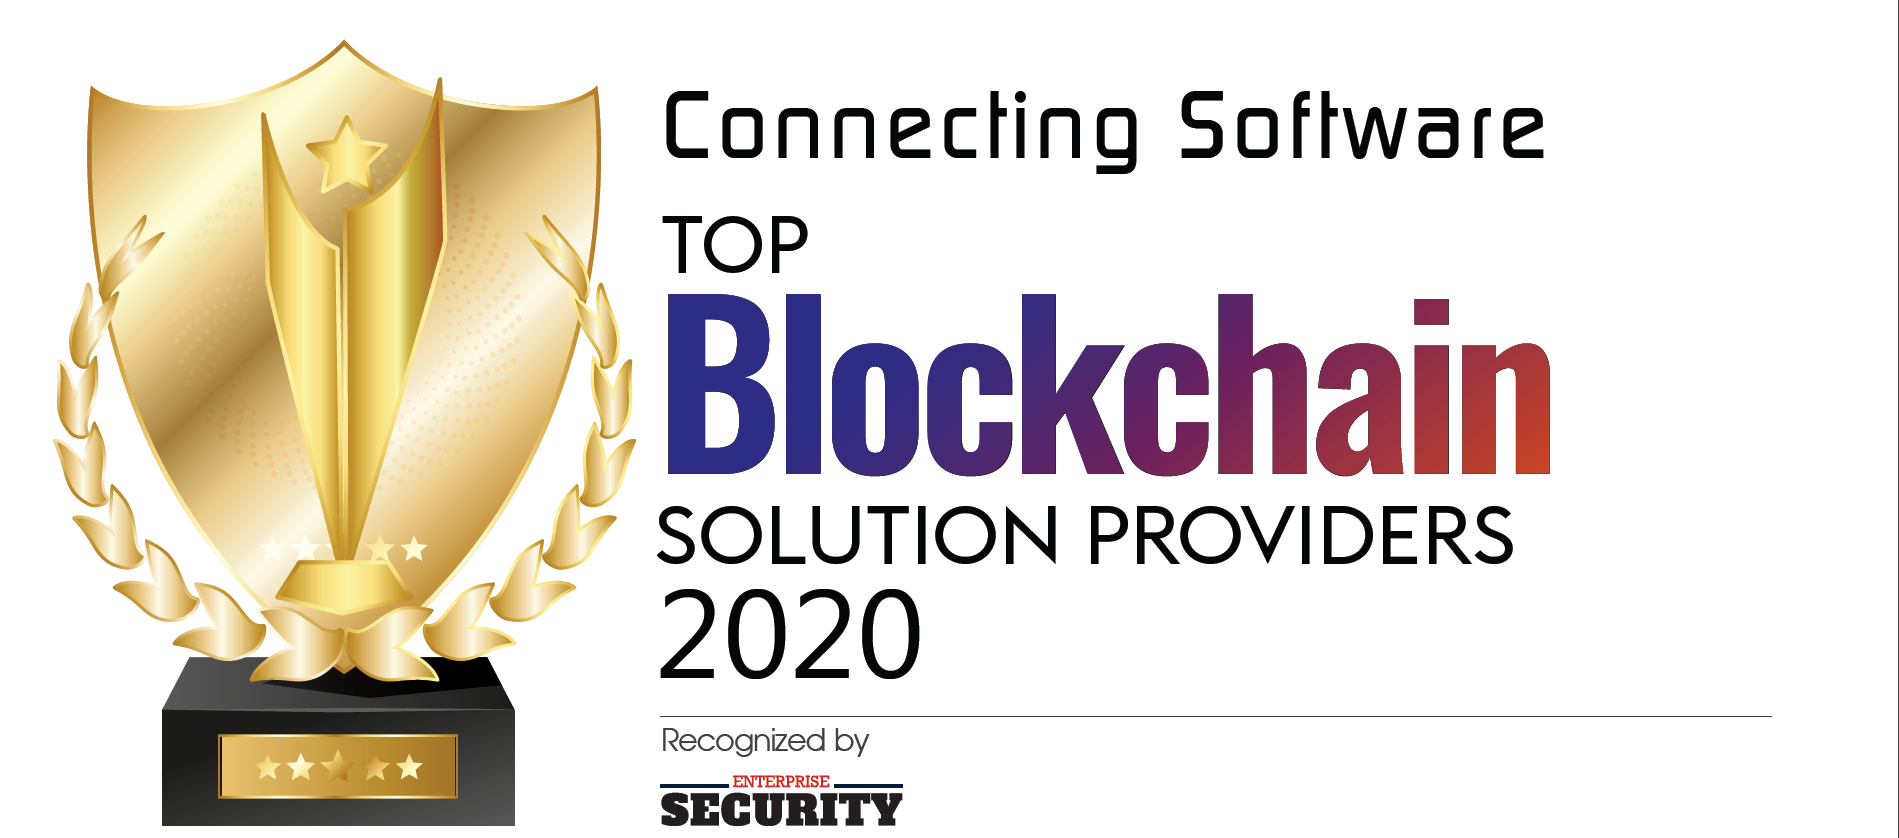 Enterprise Security Magazine Award - Top Blockchain Provider 2020